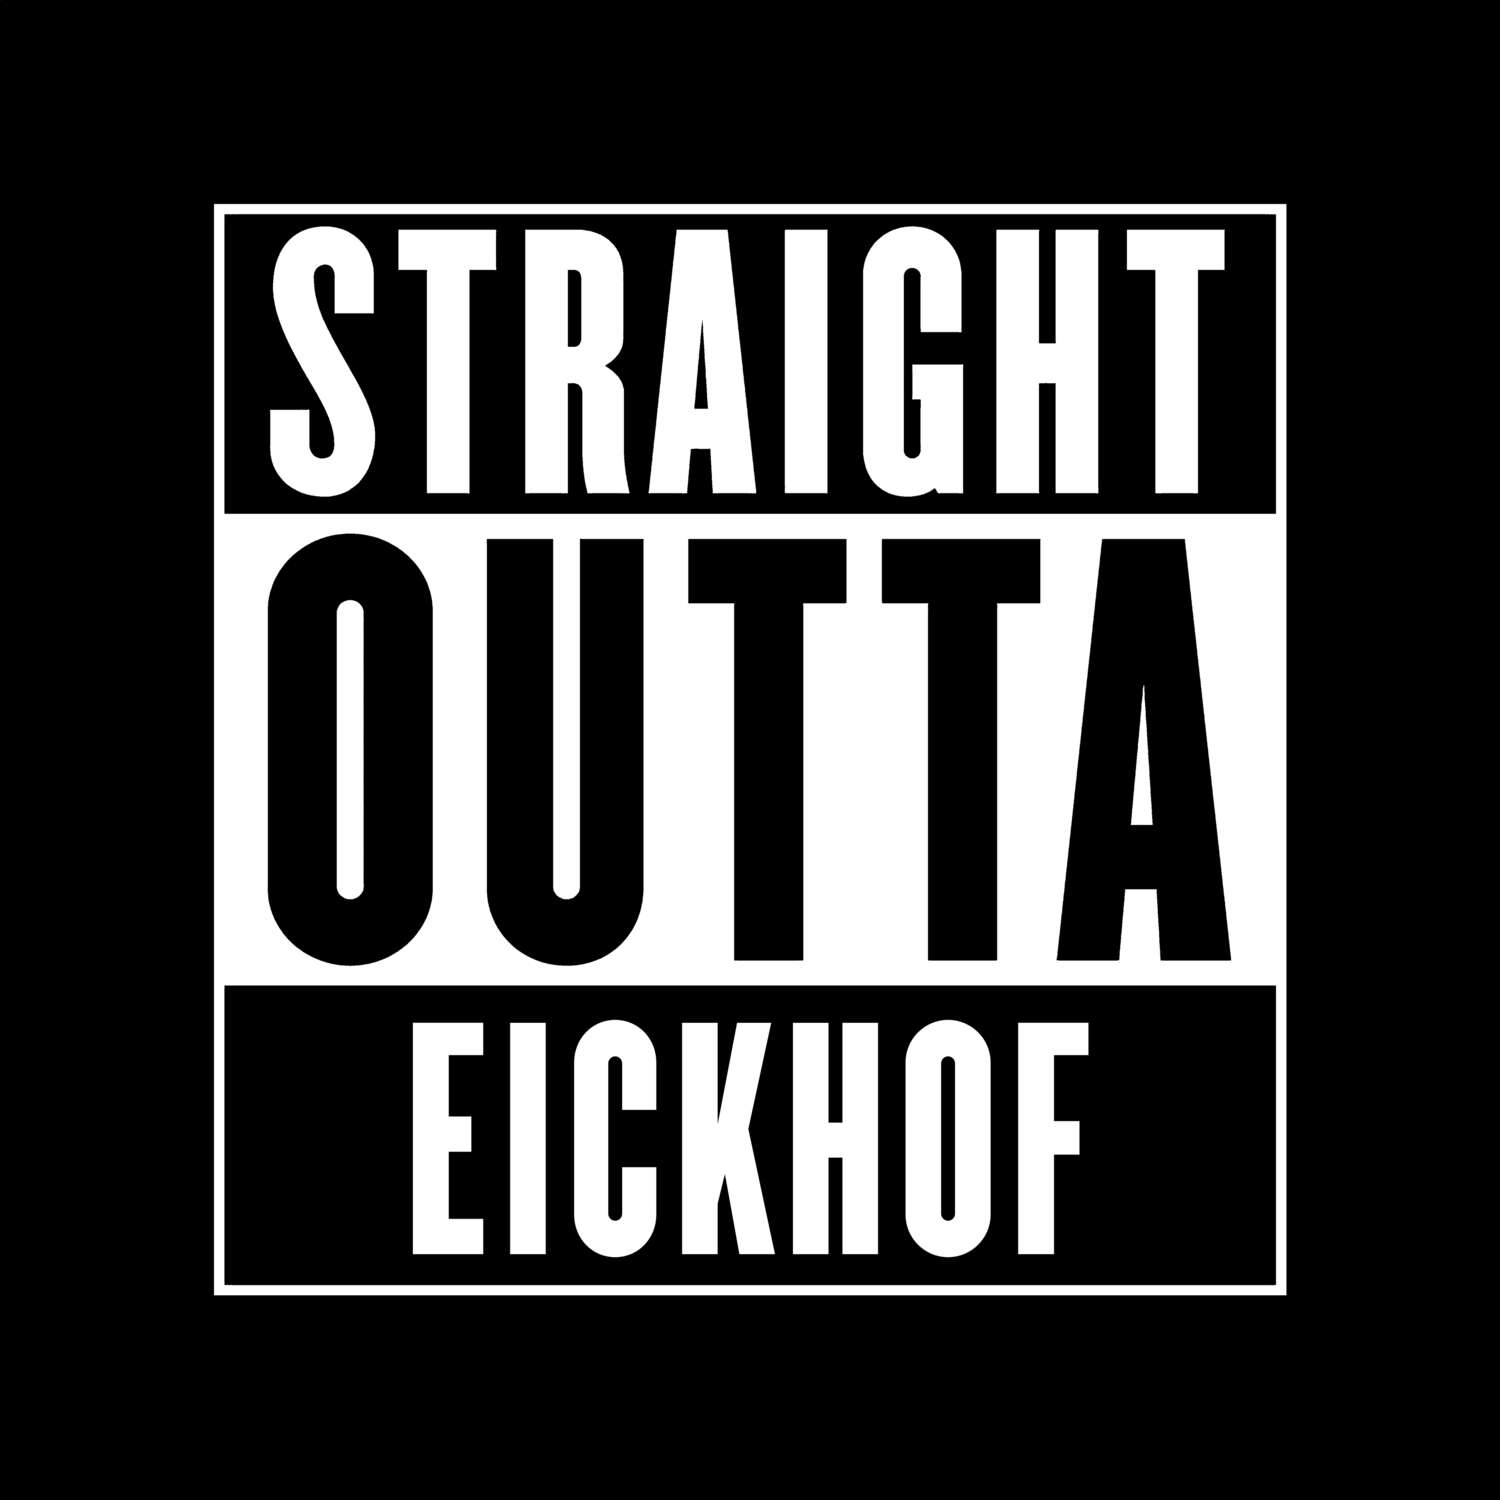 Eickhof T-Shirt »Straight Outta«